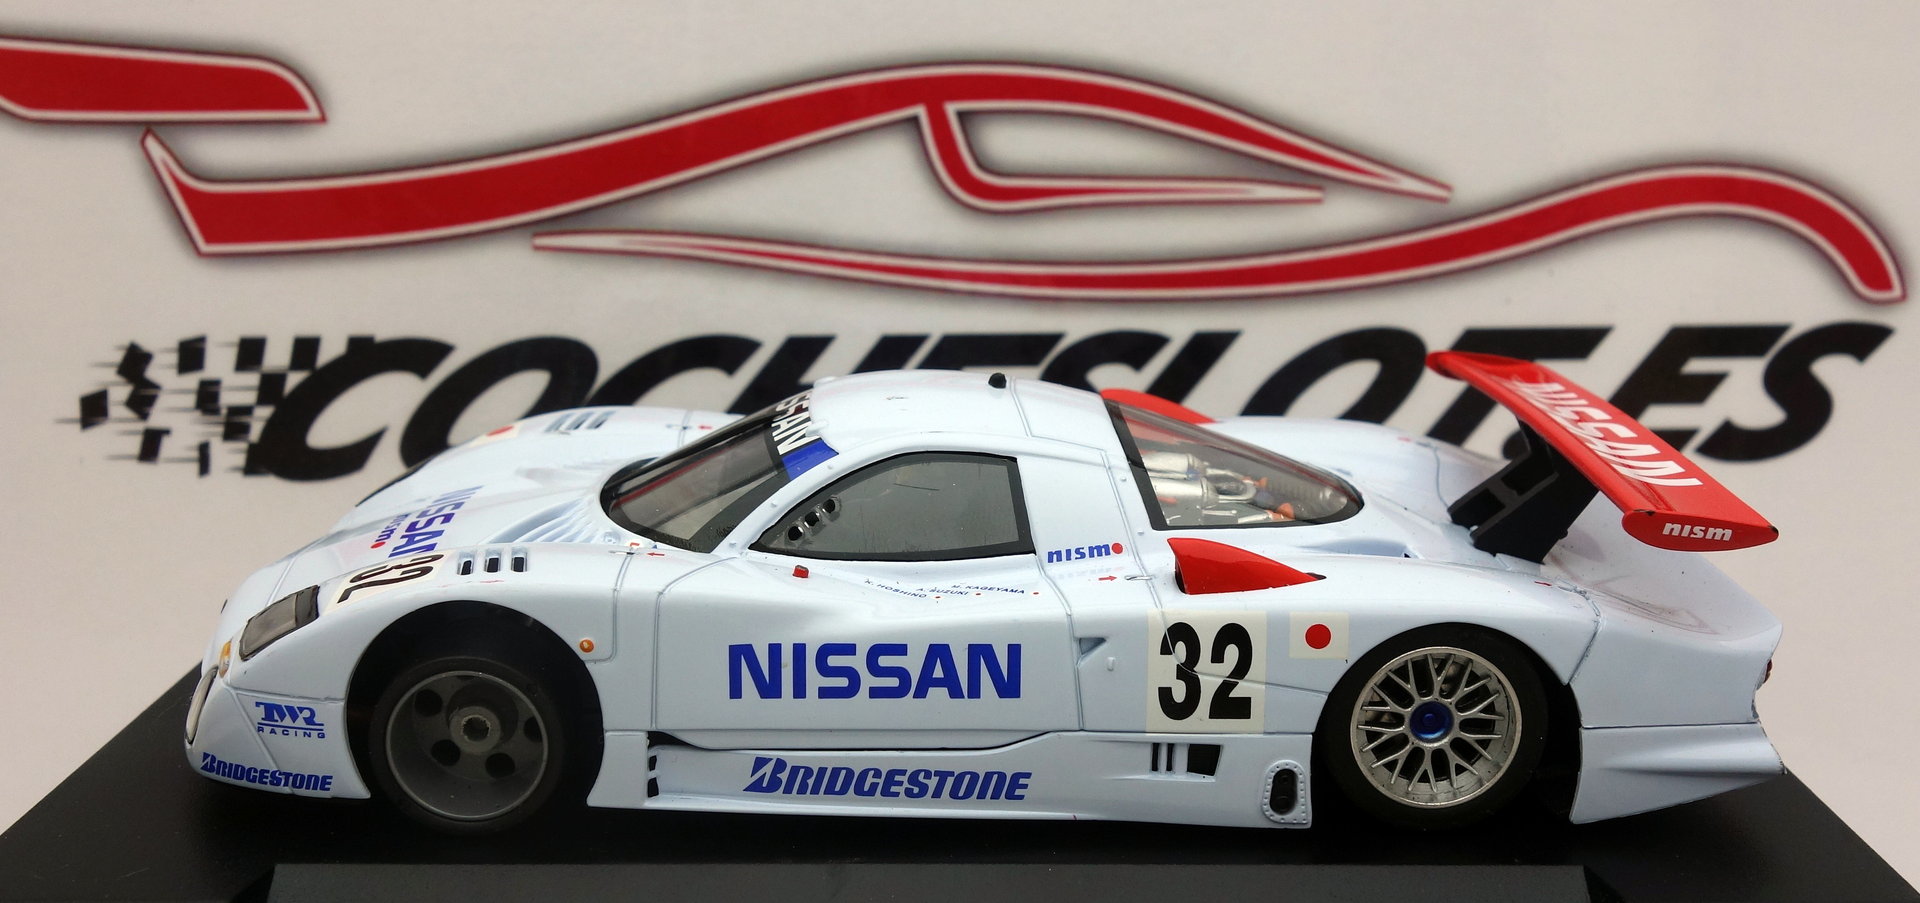 32 Nissan R390 GT1 Long Tail Le Mans 98 Pre-qualifying SICA14A 1/32 Slot.It Slot Cars No 